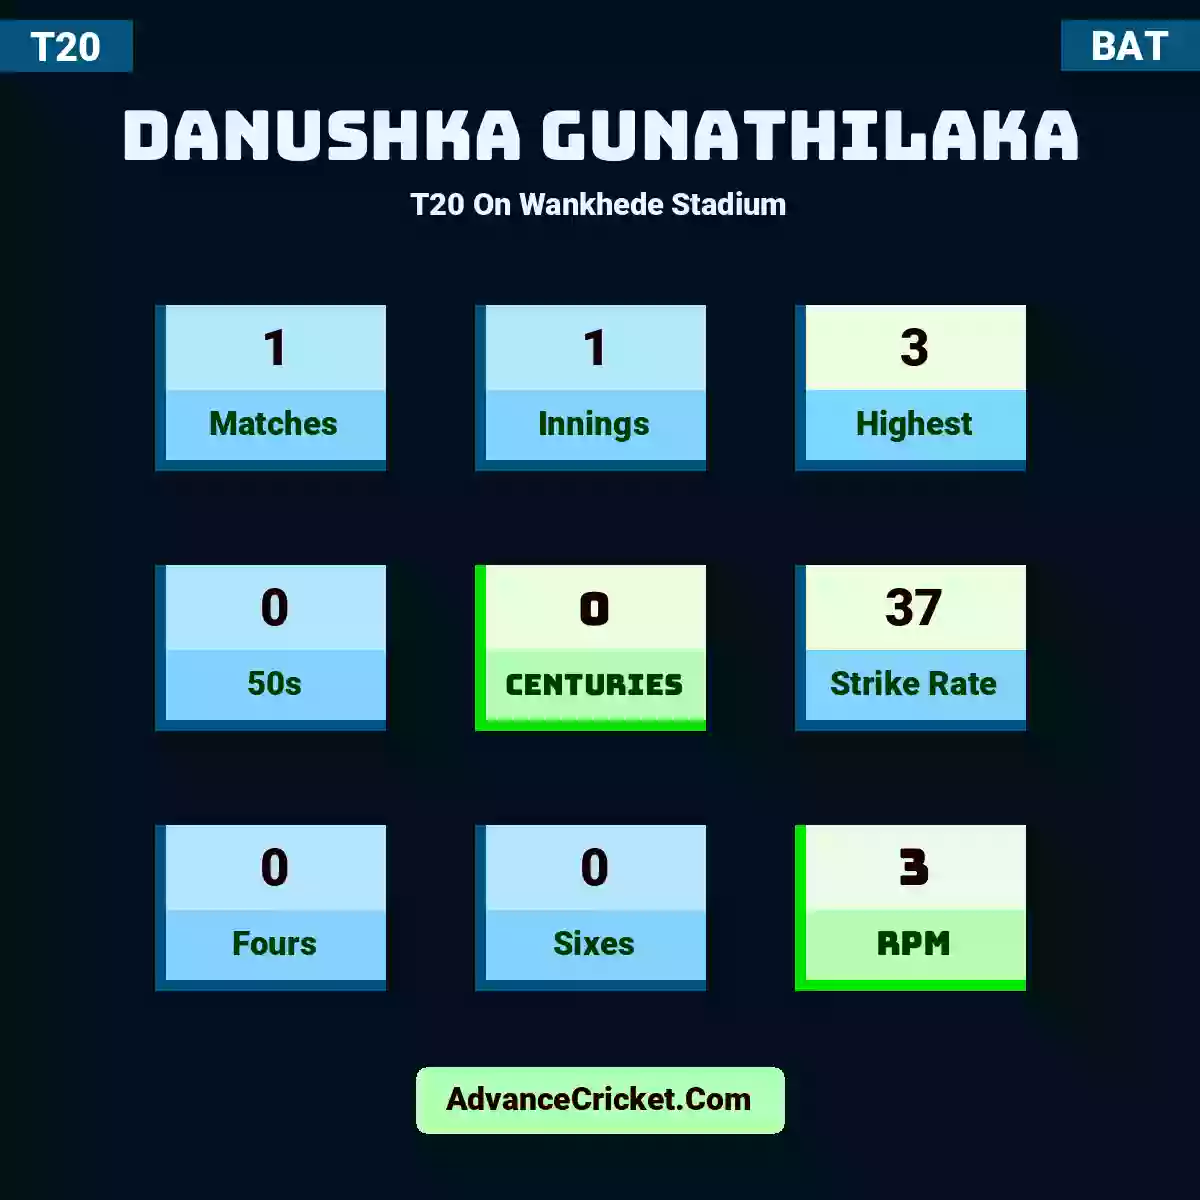 Danushka Gunathilaka T20  On Wankhede Stadium, Danushka Gunathilaka played 1 matches, scored 3 runs as highest, 0 half-centuries, and 0 centuries, with a strike rate of 37. D.Gunathilaka hit 0 fours and 0 sixes, with an RPM of 3.